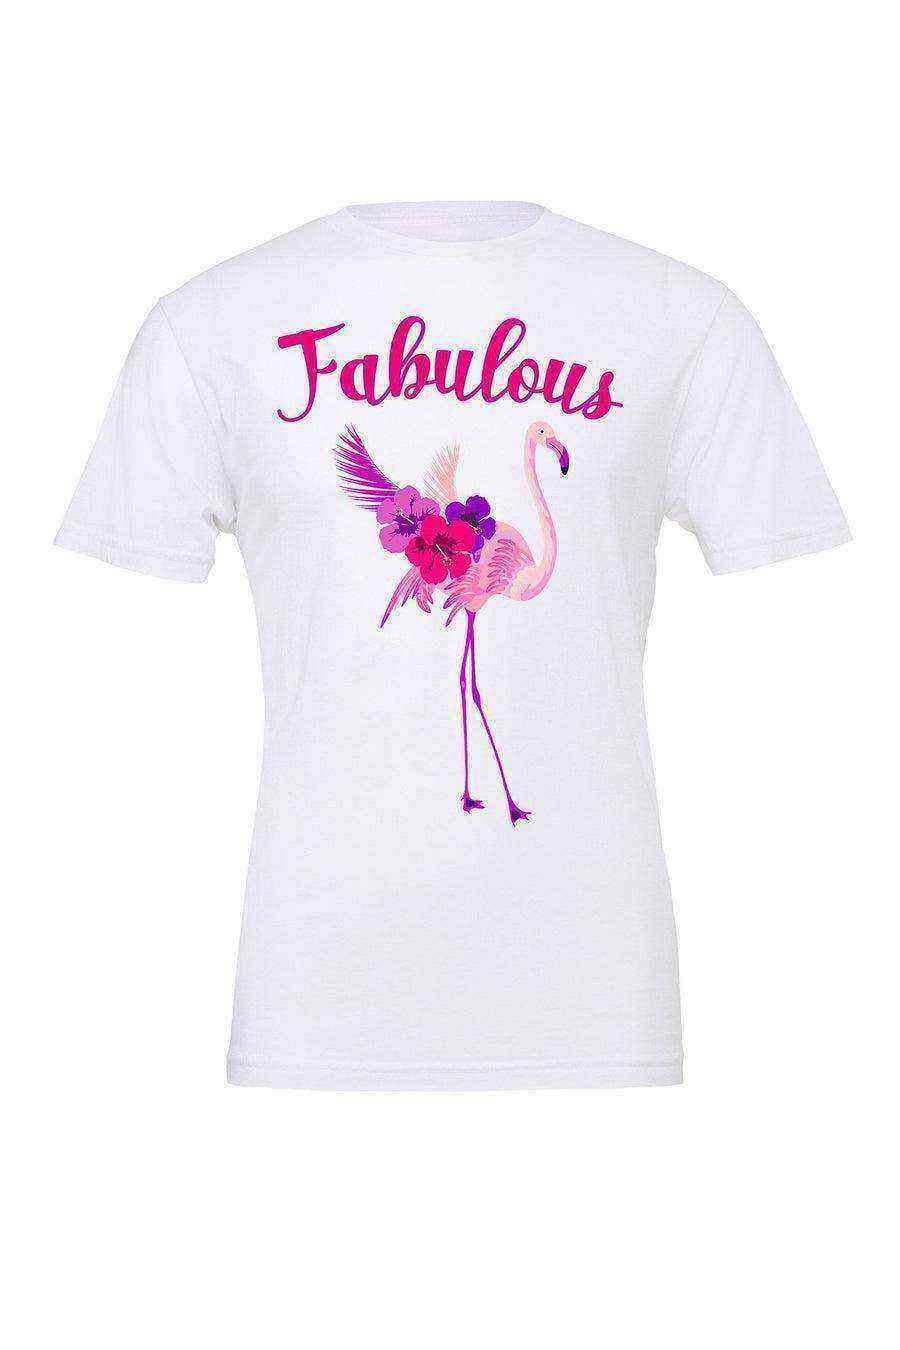 Fabulous Flamingo Shirt | Flamingo Shirt | Graphic Tee - Dylan's Tees